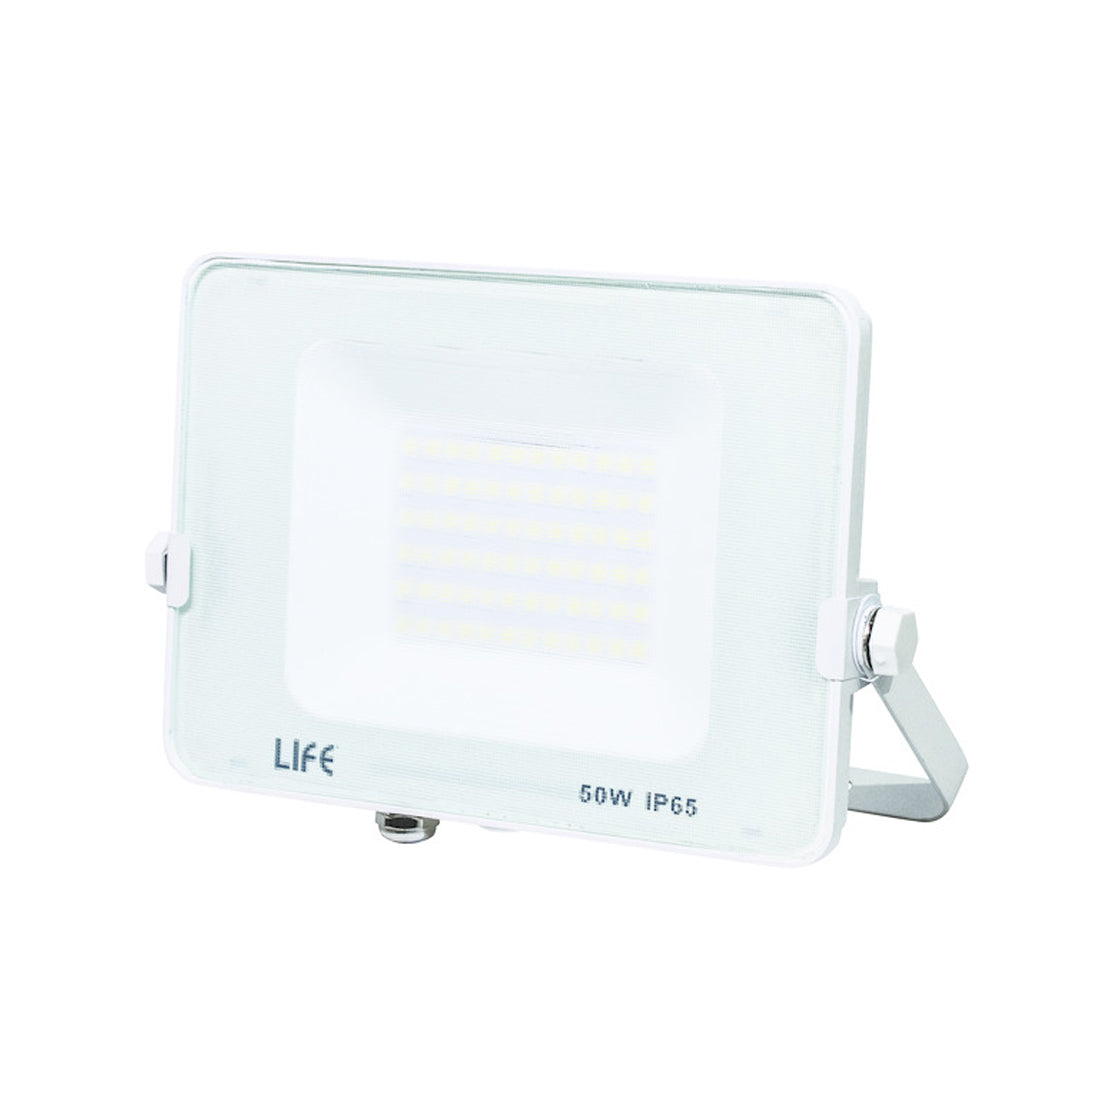 Life Faretto slim bianco IP65, LED SMD Serie FA4, luce naturale 4000K, 220-240Vac, 201x152x25mm